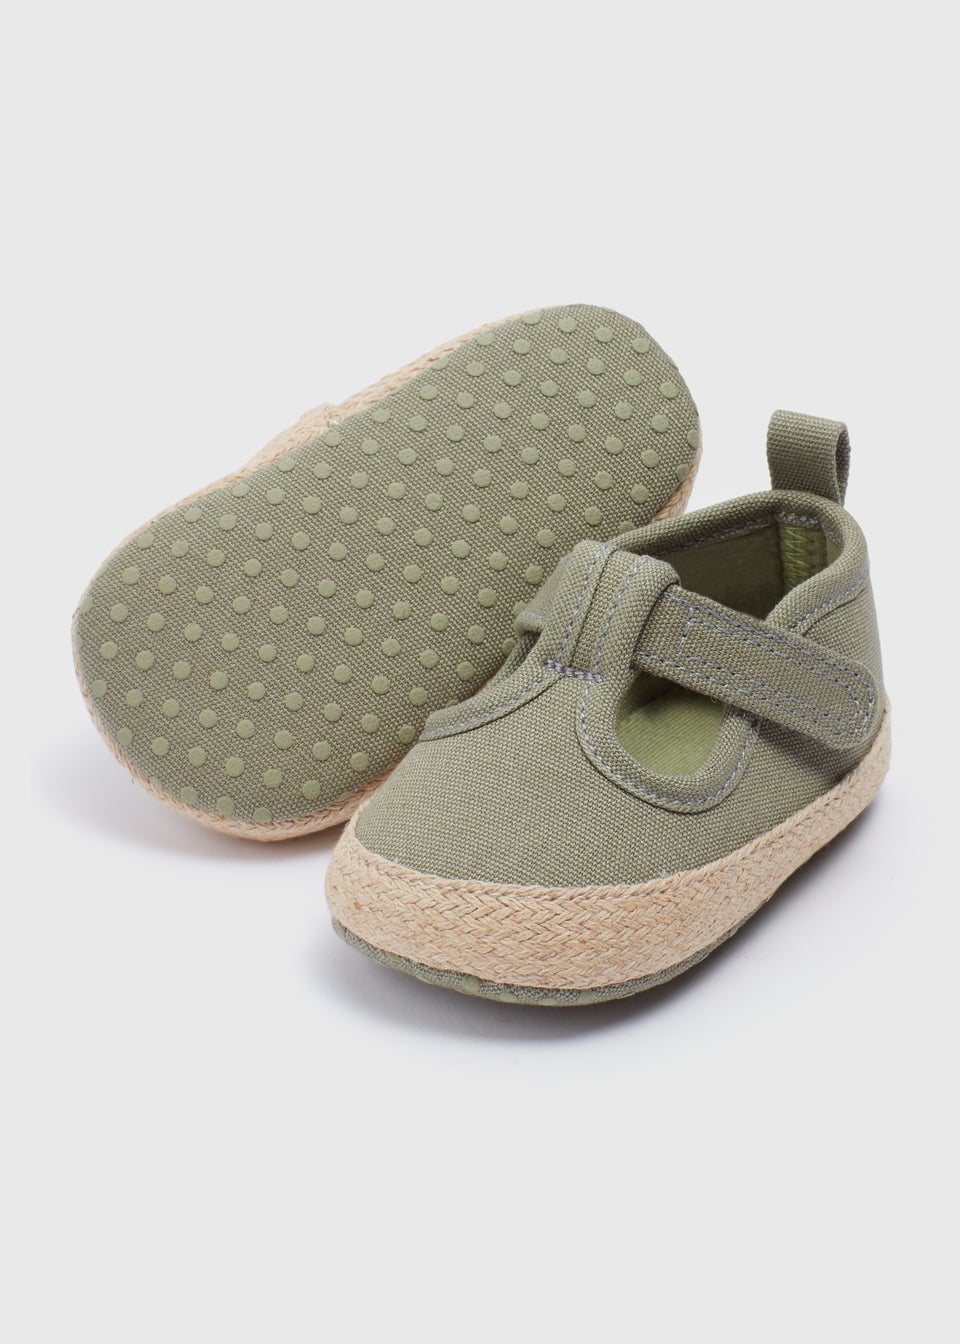 Baby Khaki T Bar Canvas Shoes (Newborn-18mths)